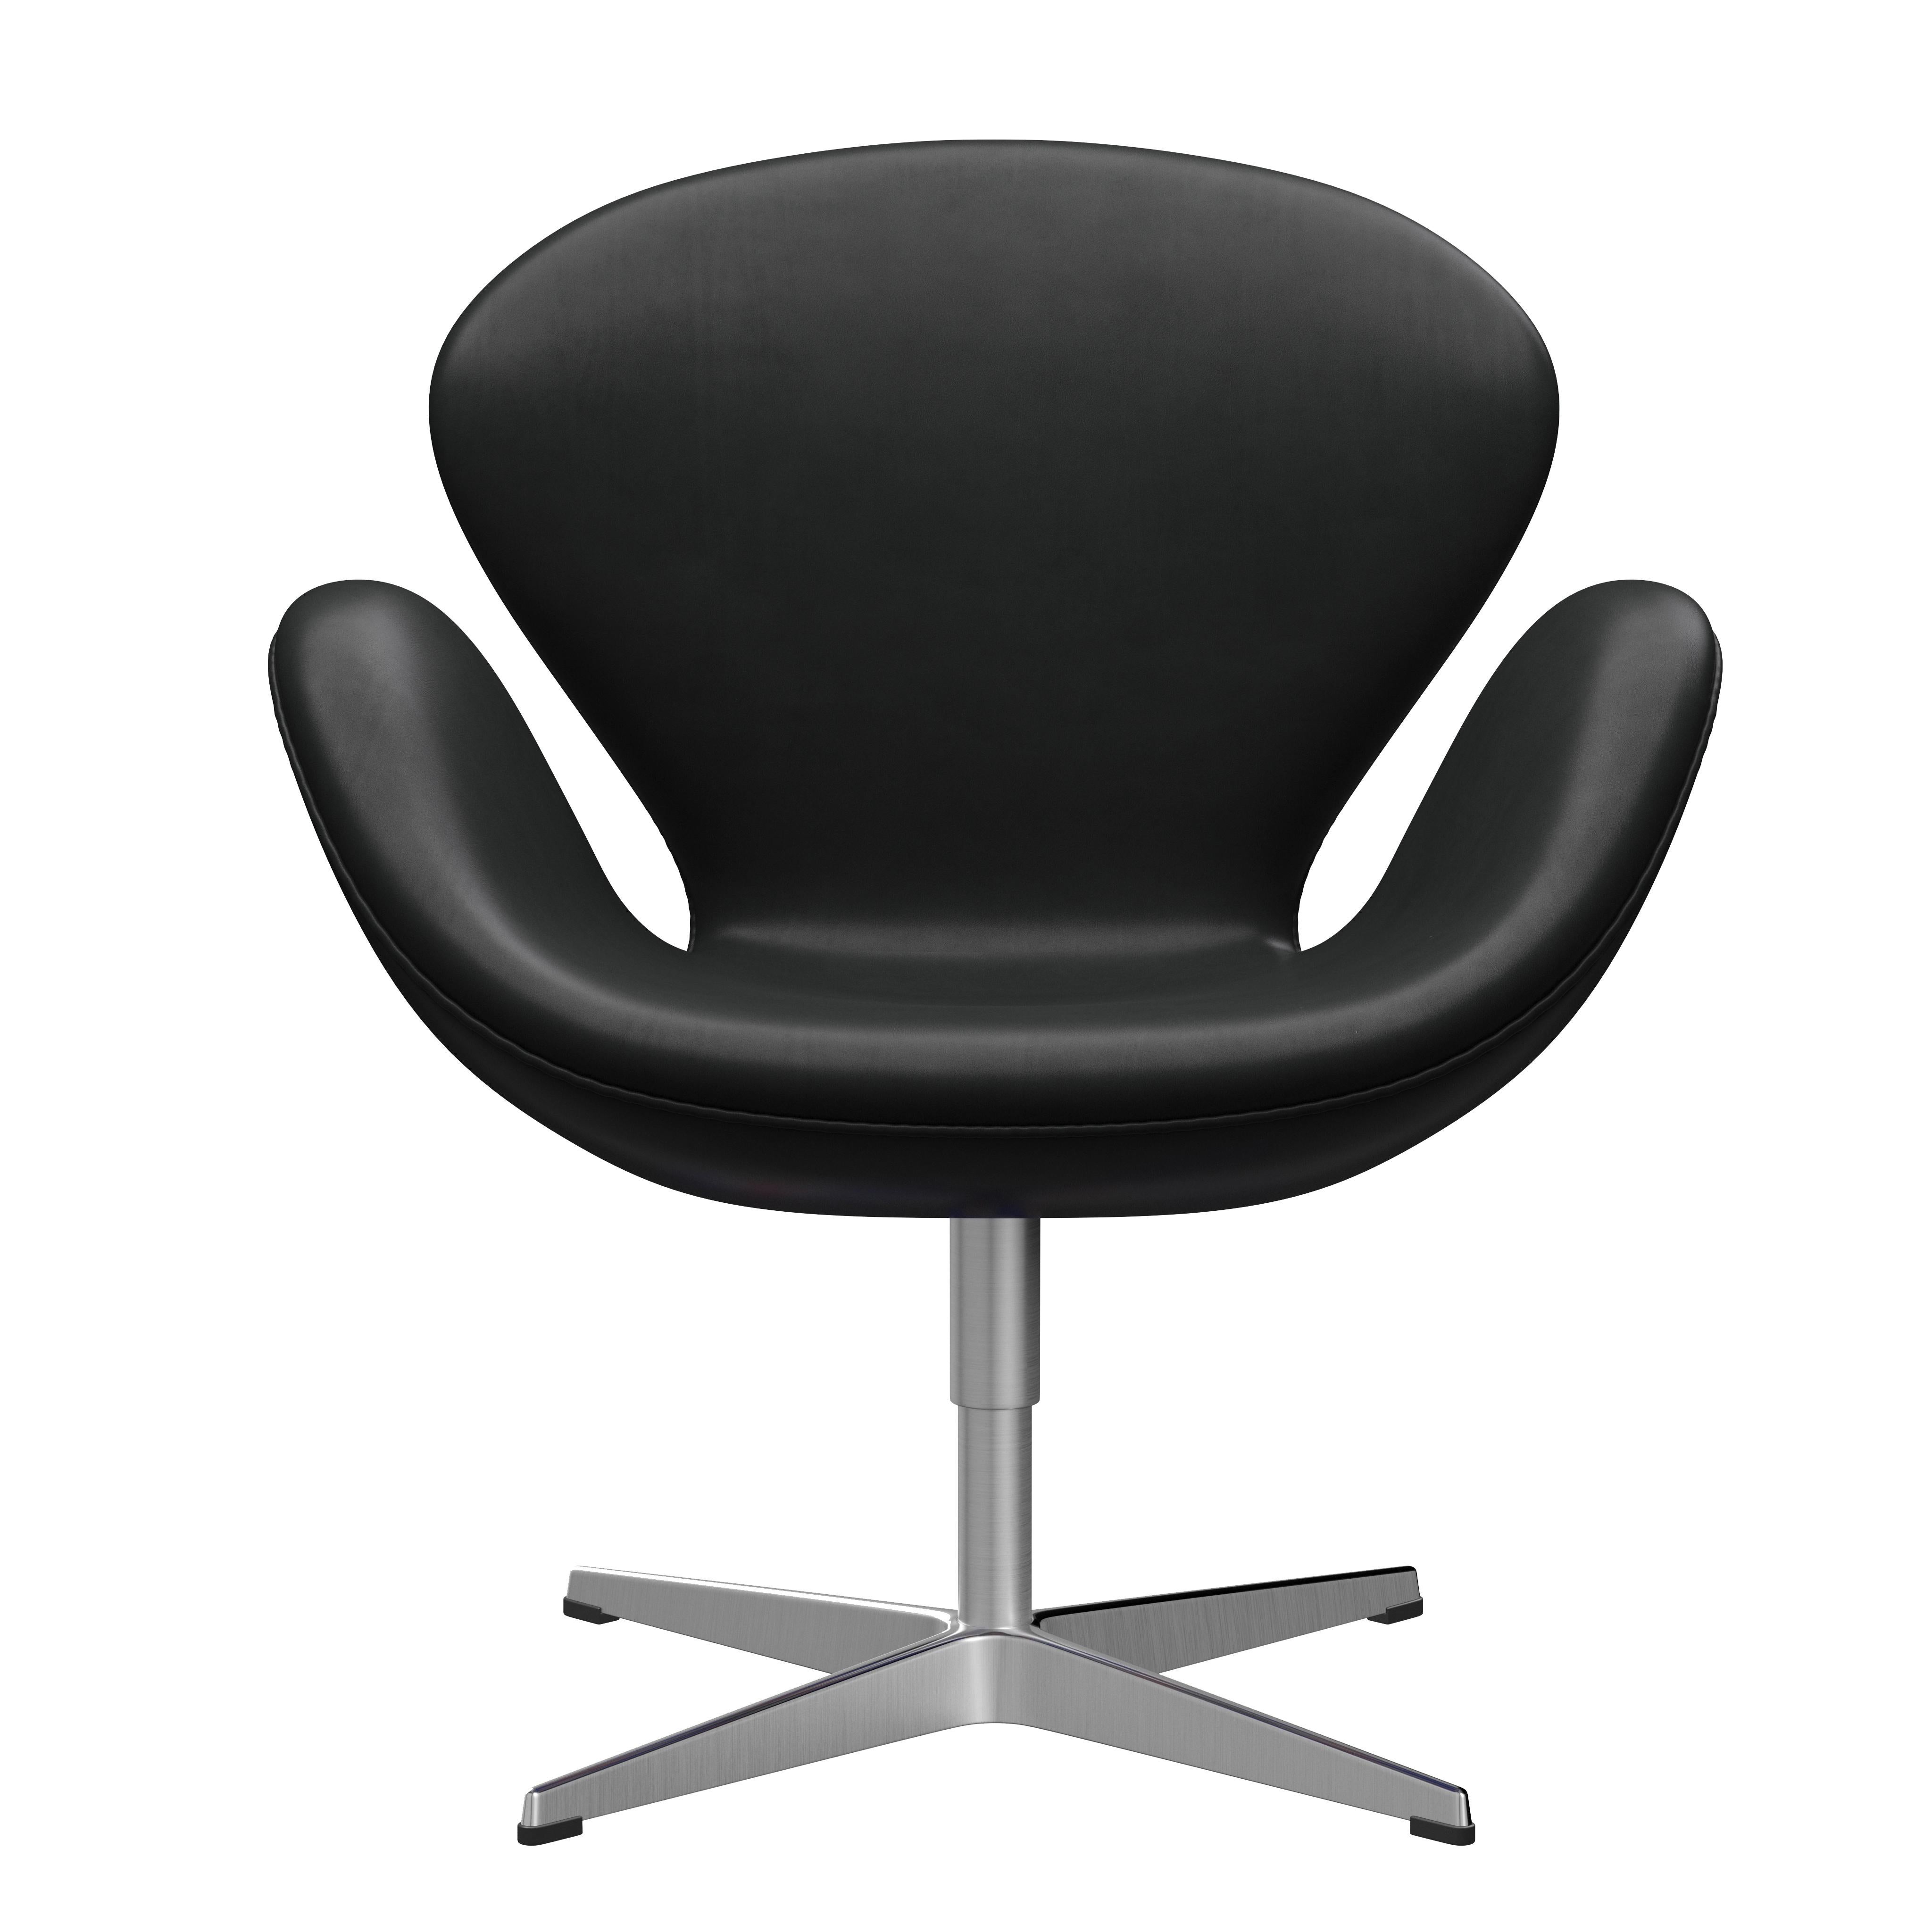 Arne Jacobsen 'Swan' Chair for Fritz Hansen in Leather Upholstery (Cat. 5) For Sale 9